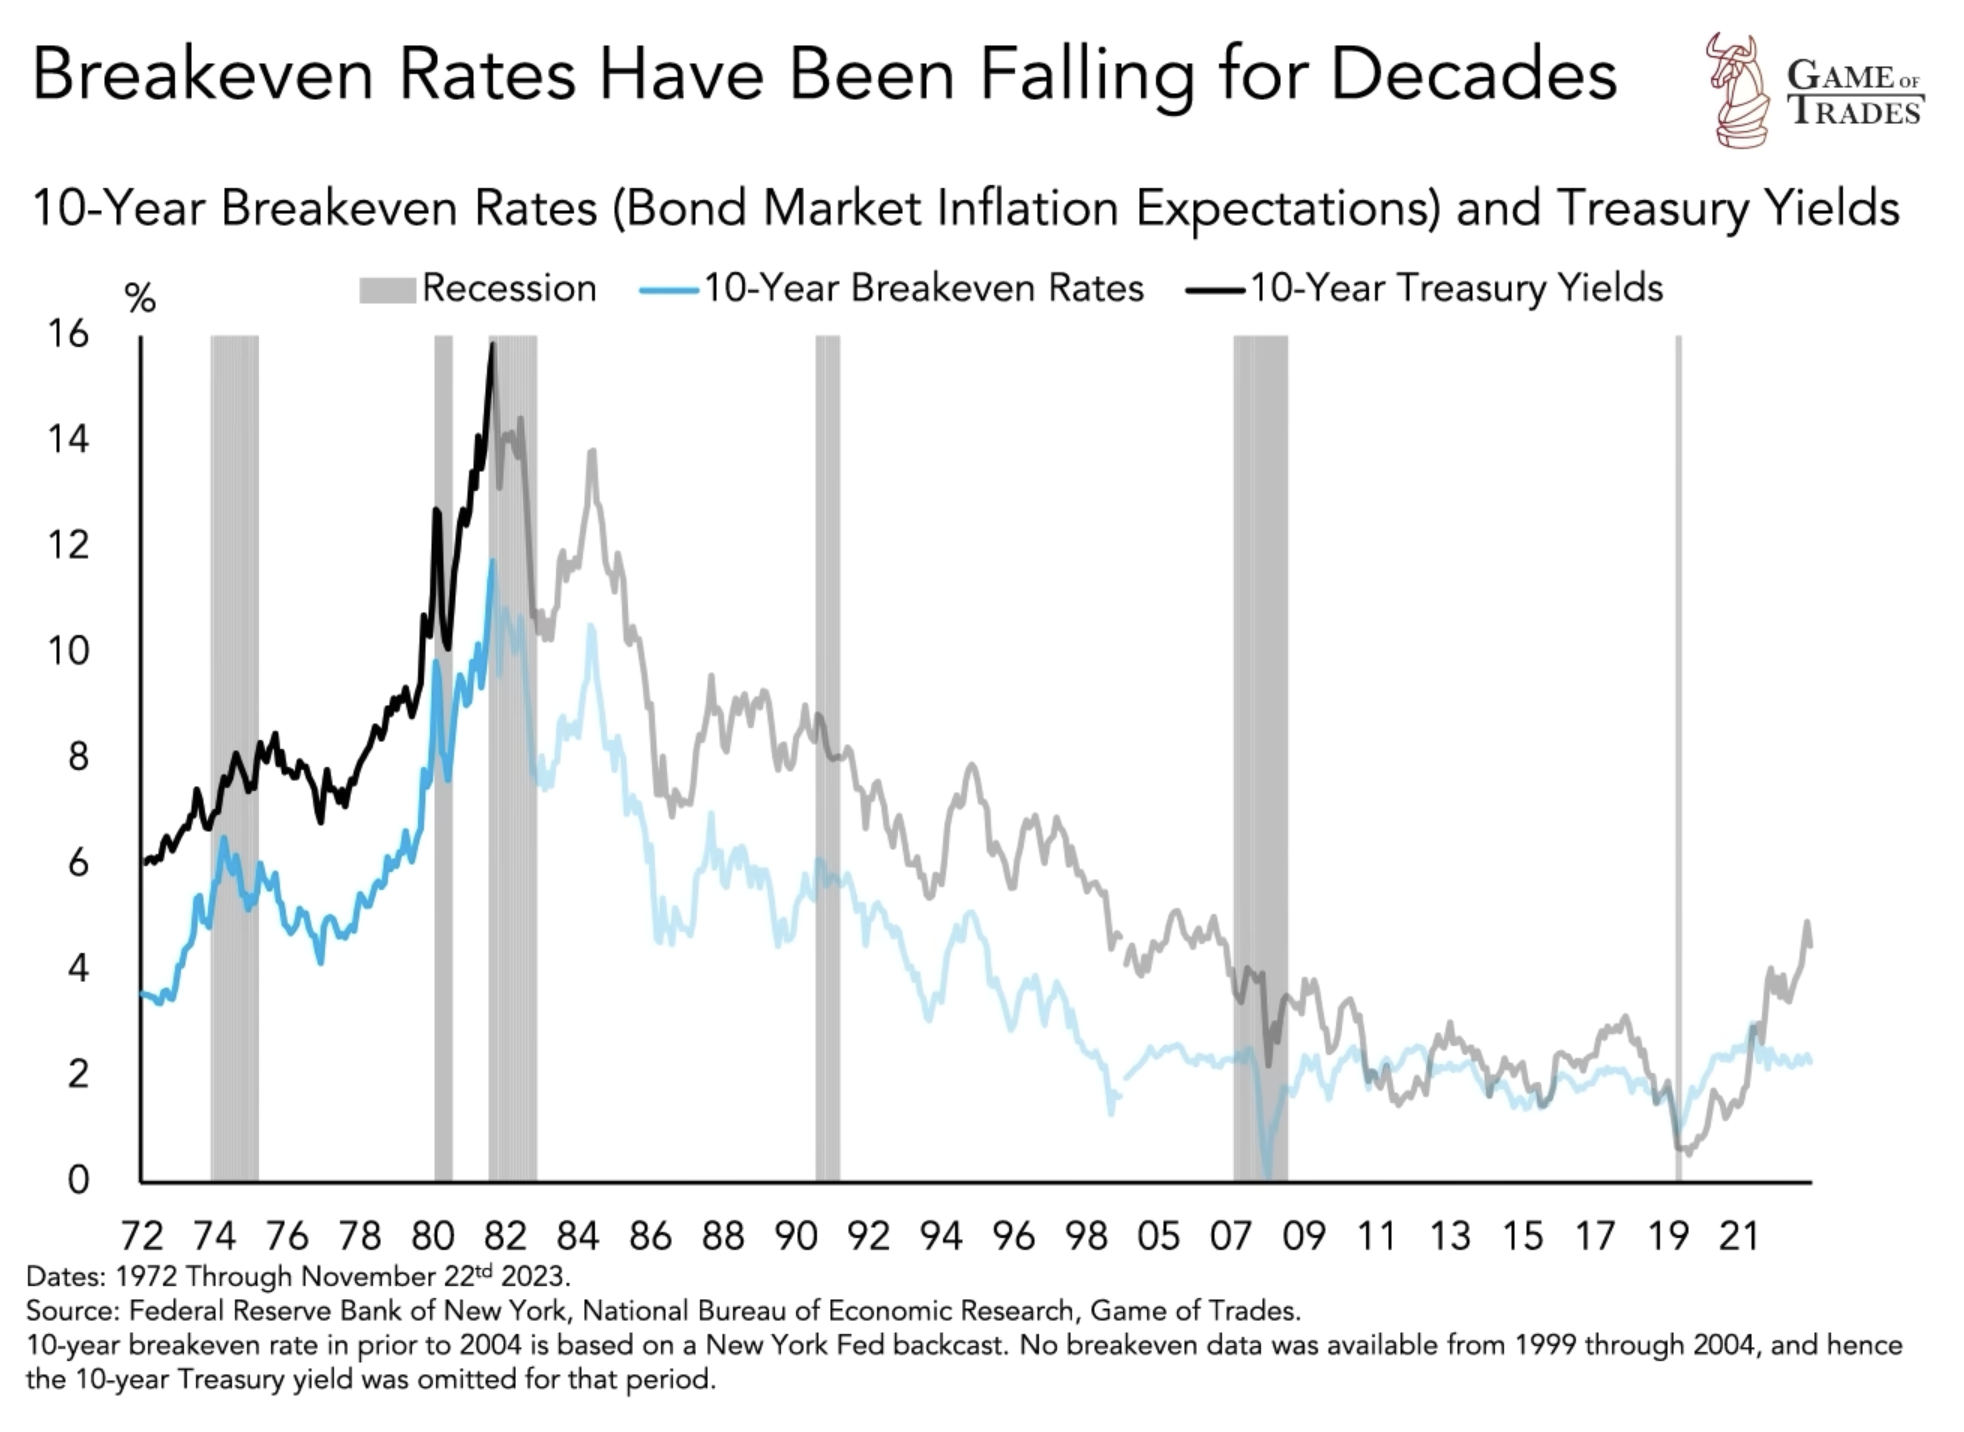 Bond market inflation expectations